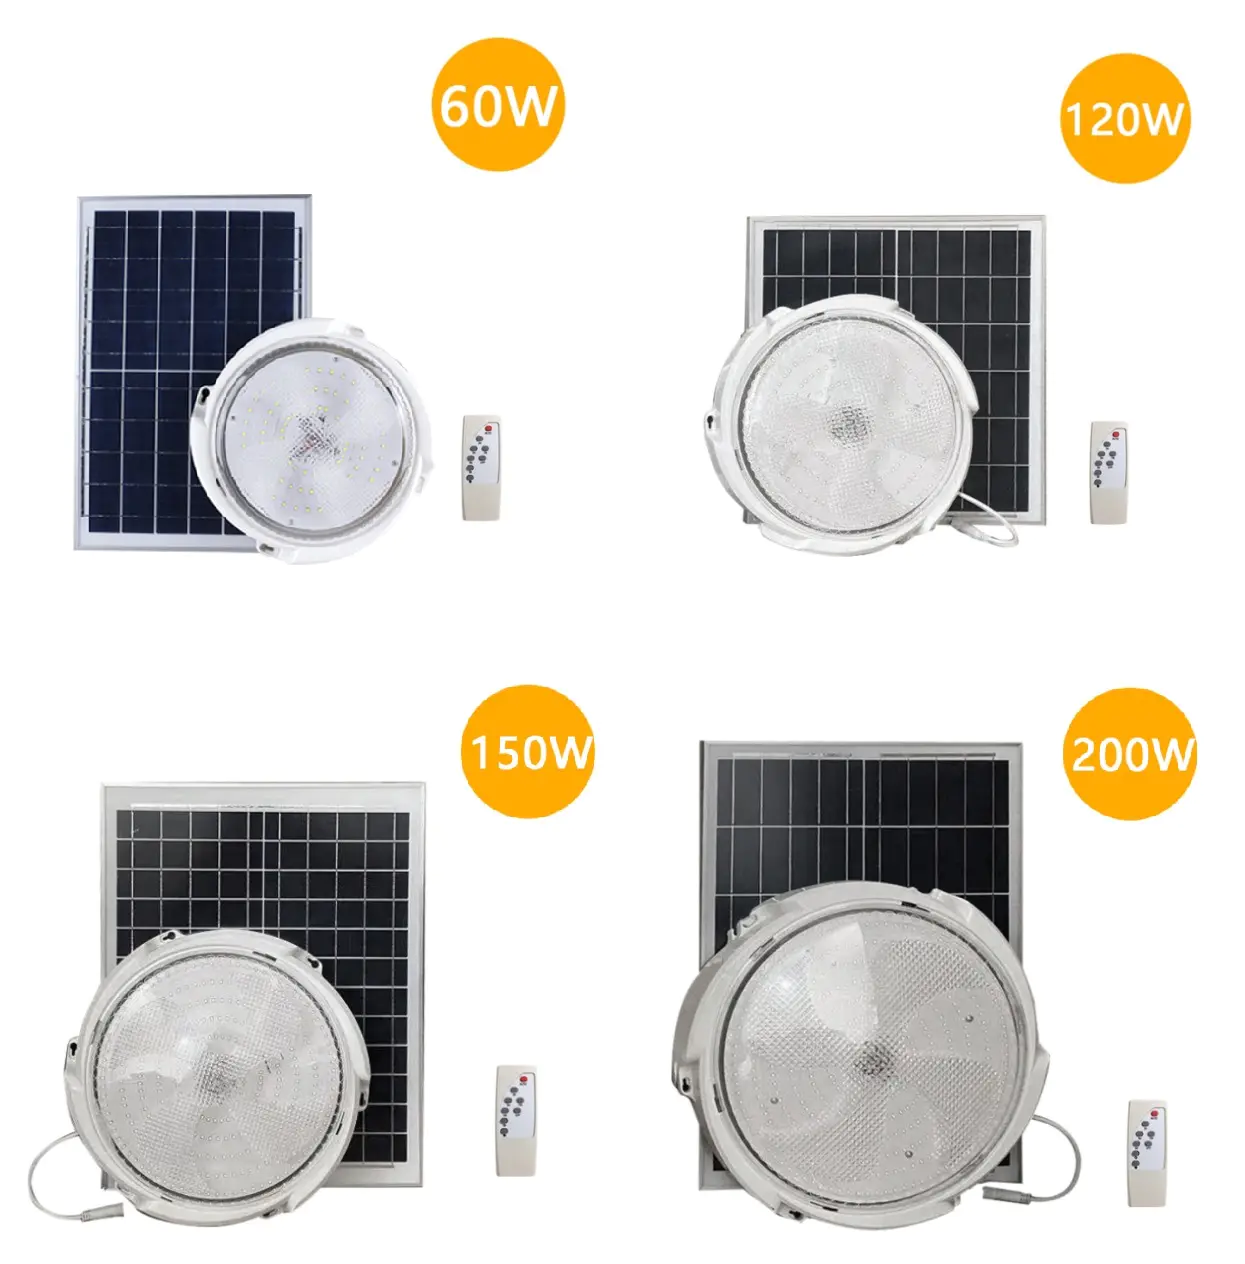 Litel Technology low cost solar powered ceiling light ODM for alert